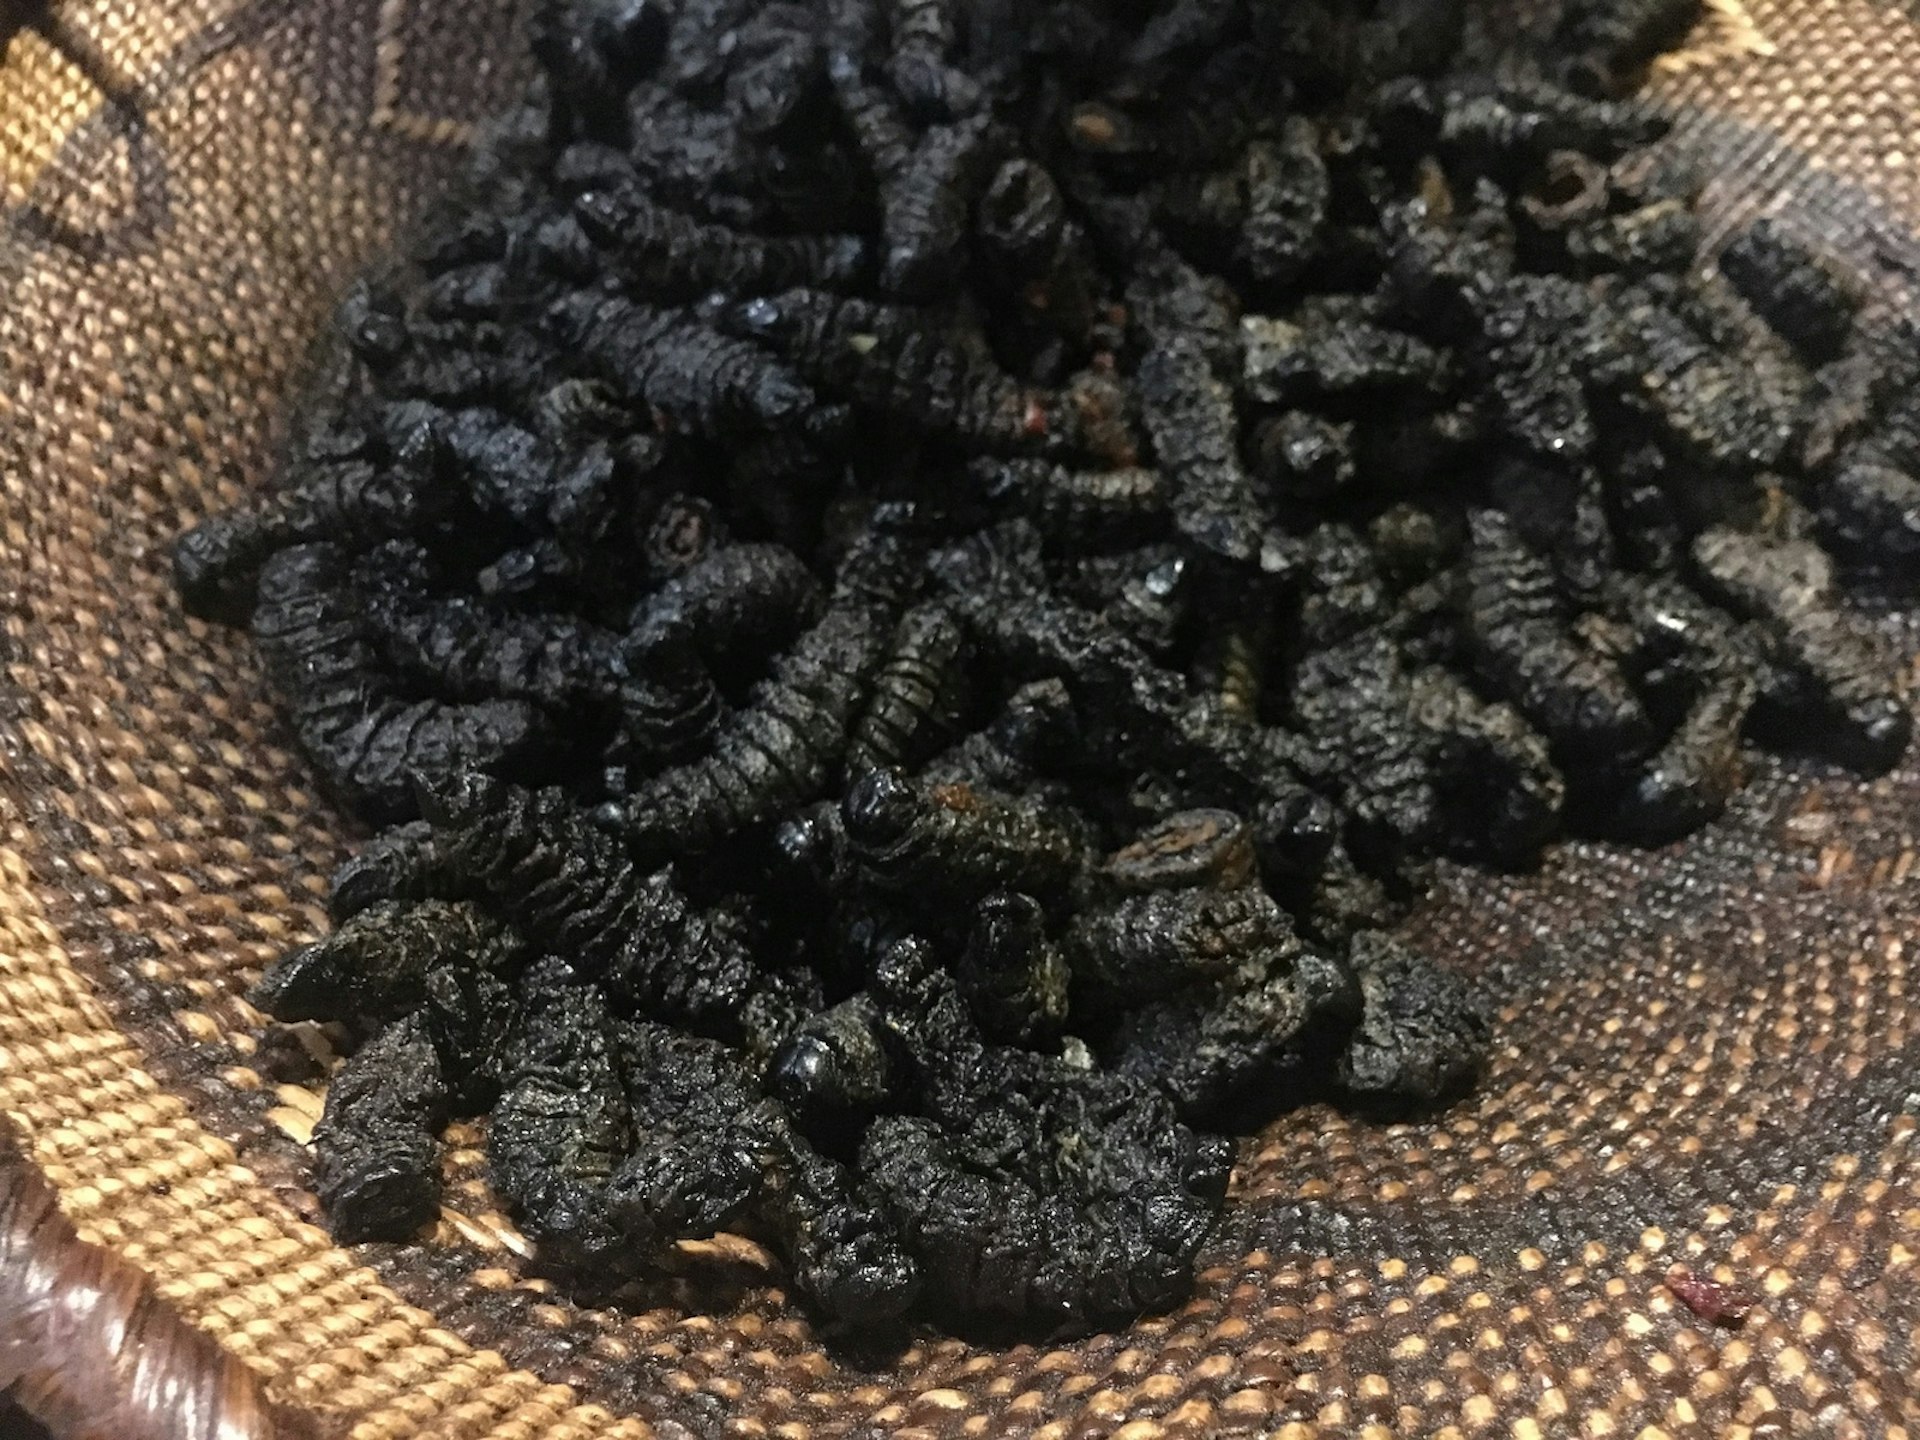 Dried mopane worms